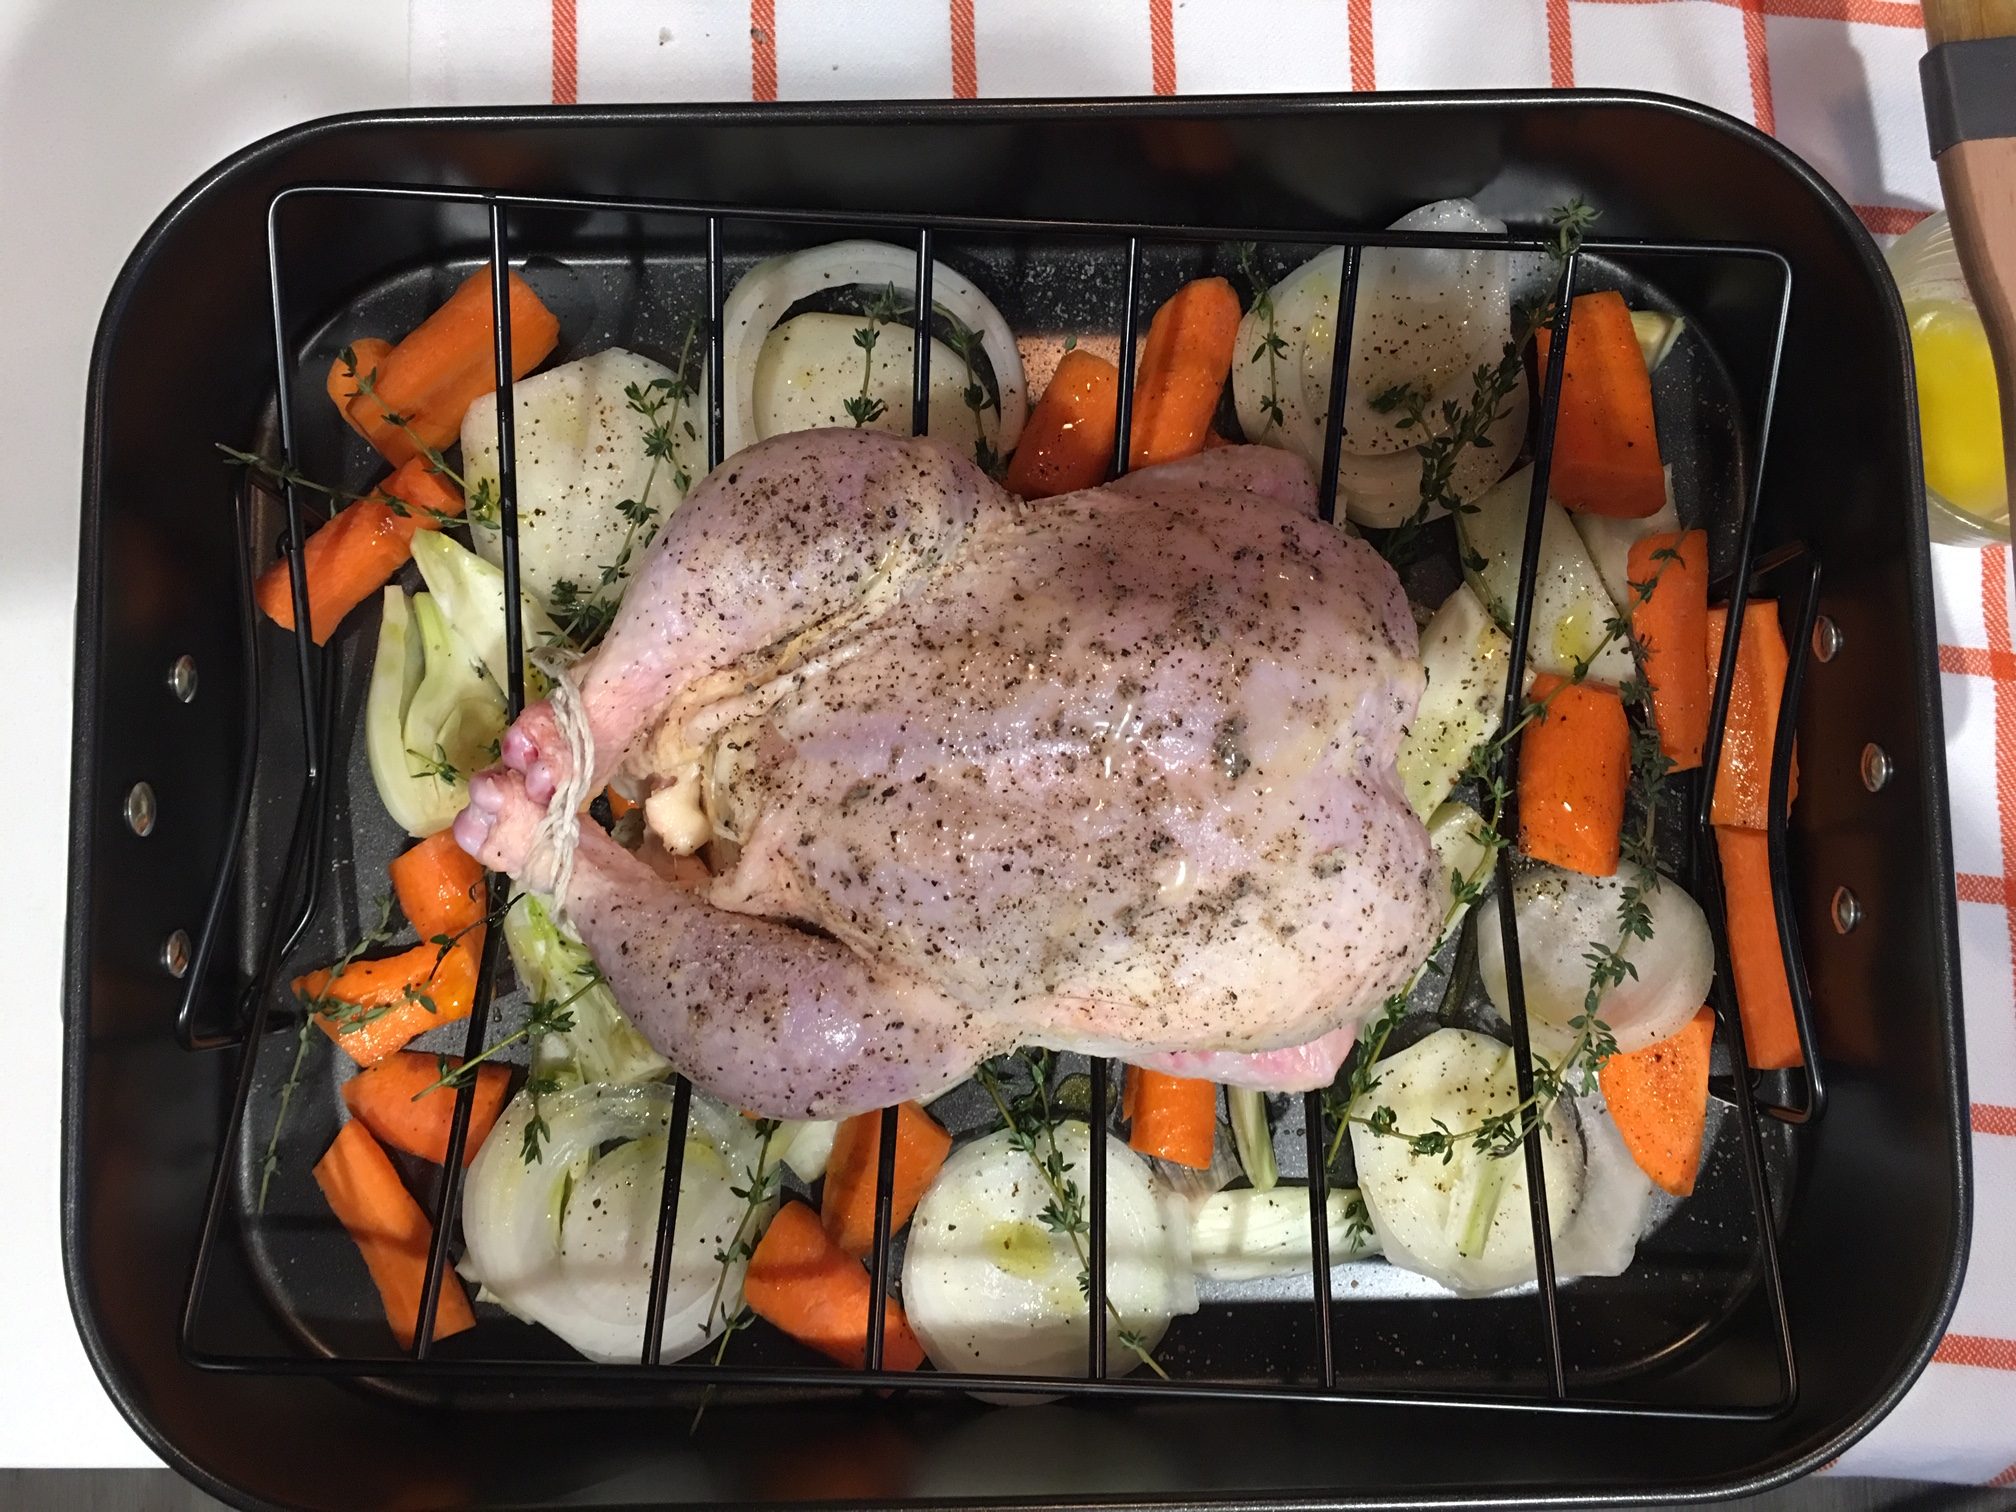  We Tried Ina Gartens Perfect Roast Chicken